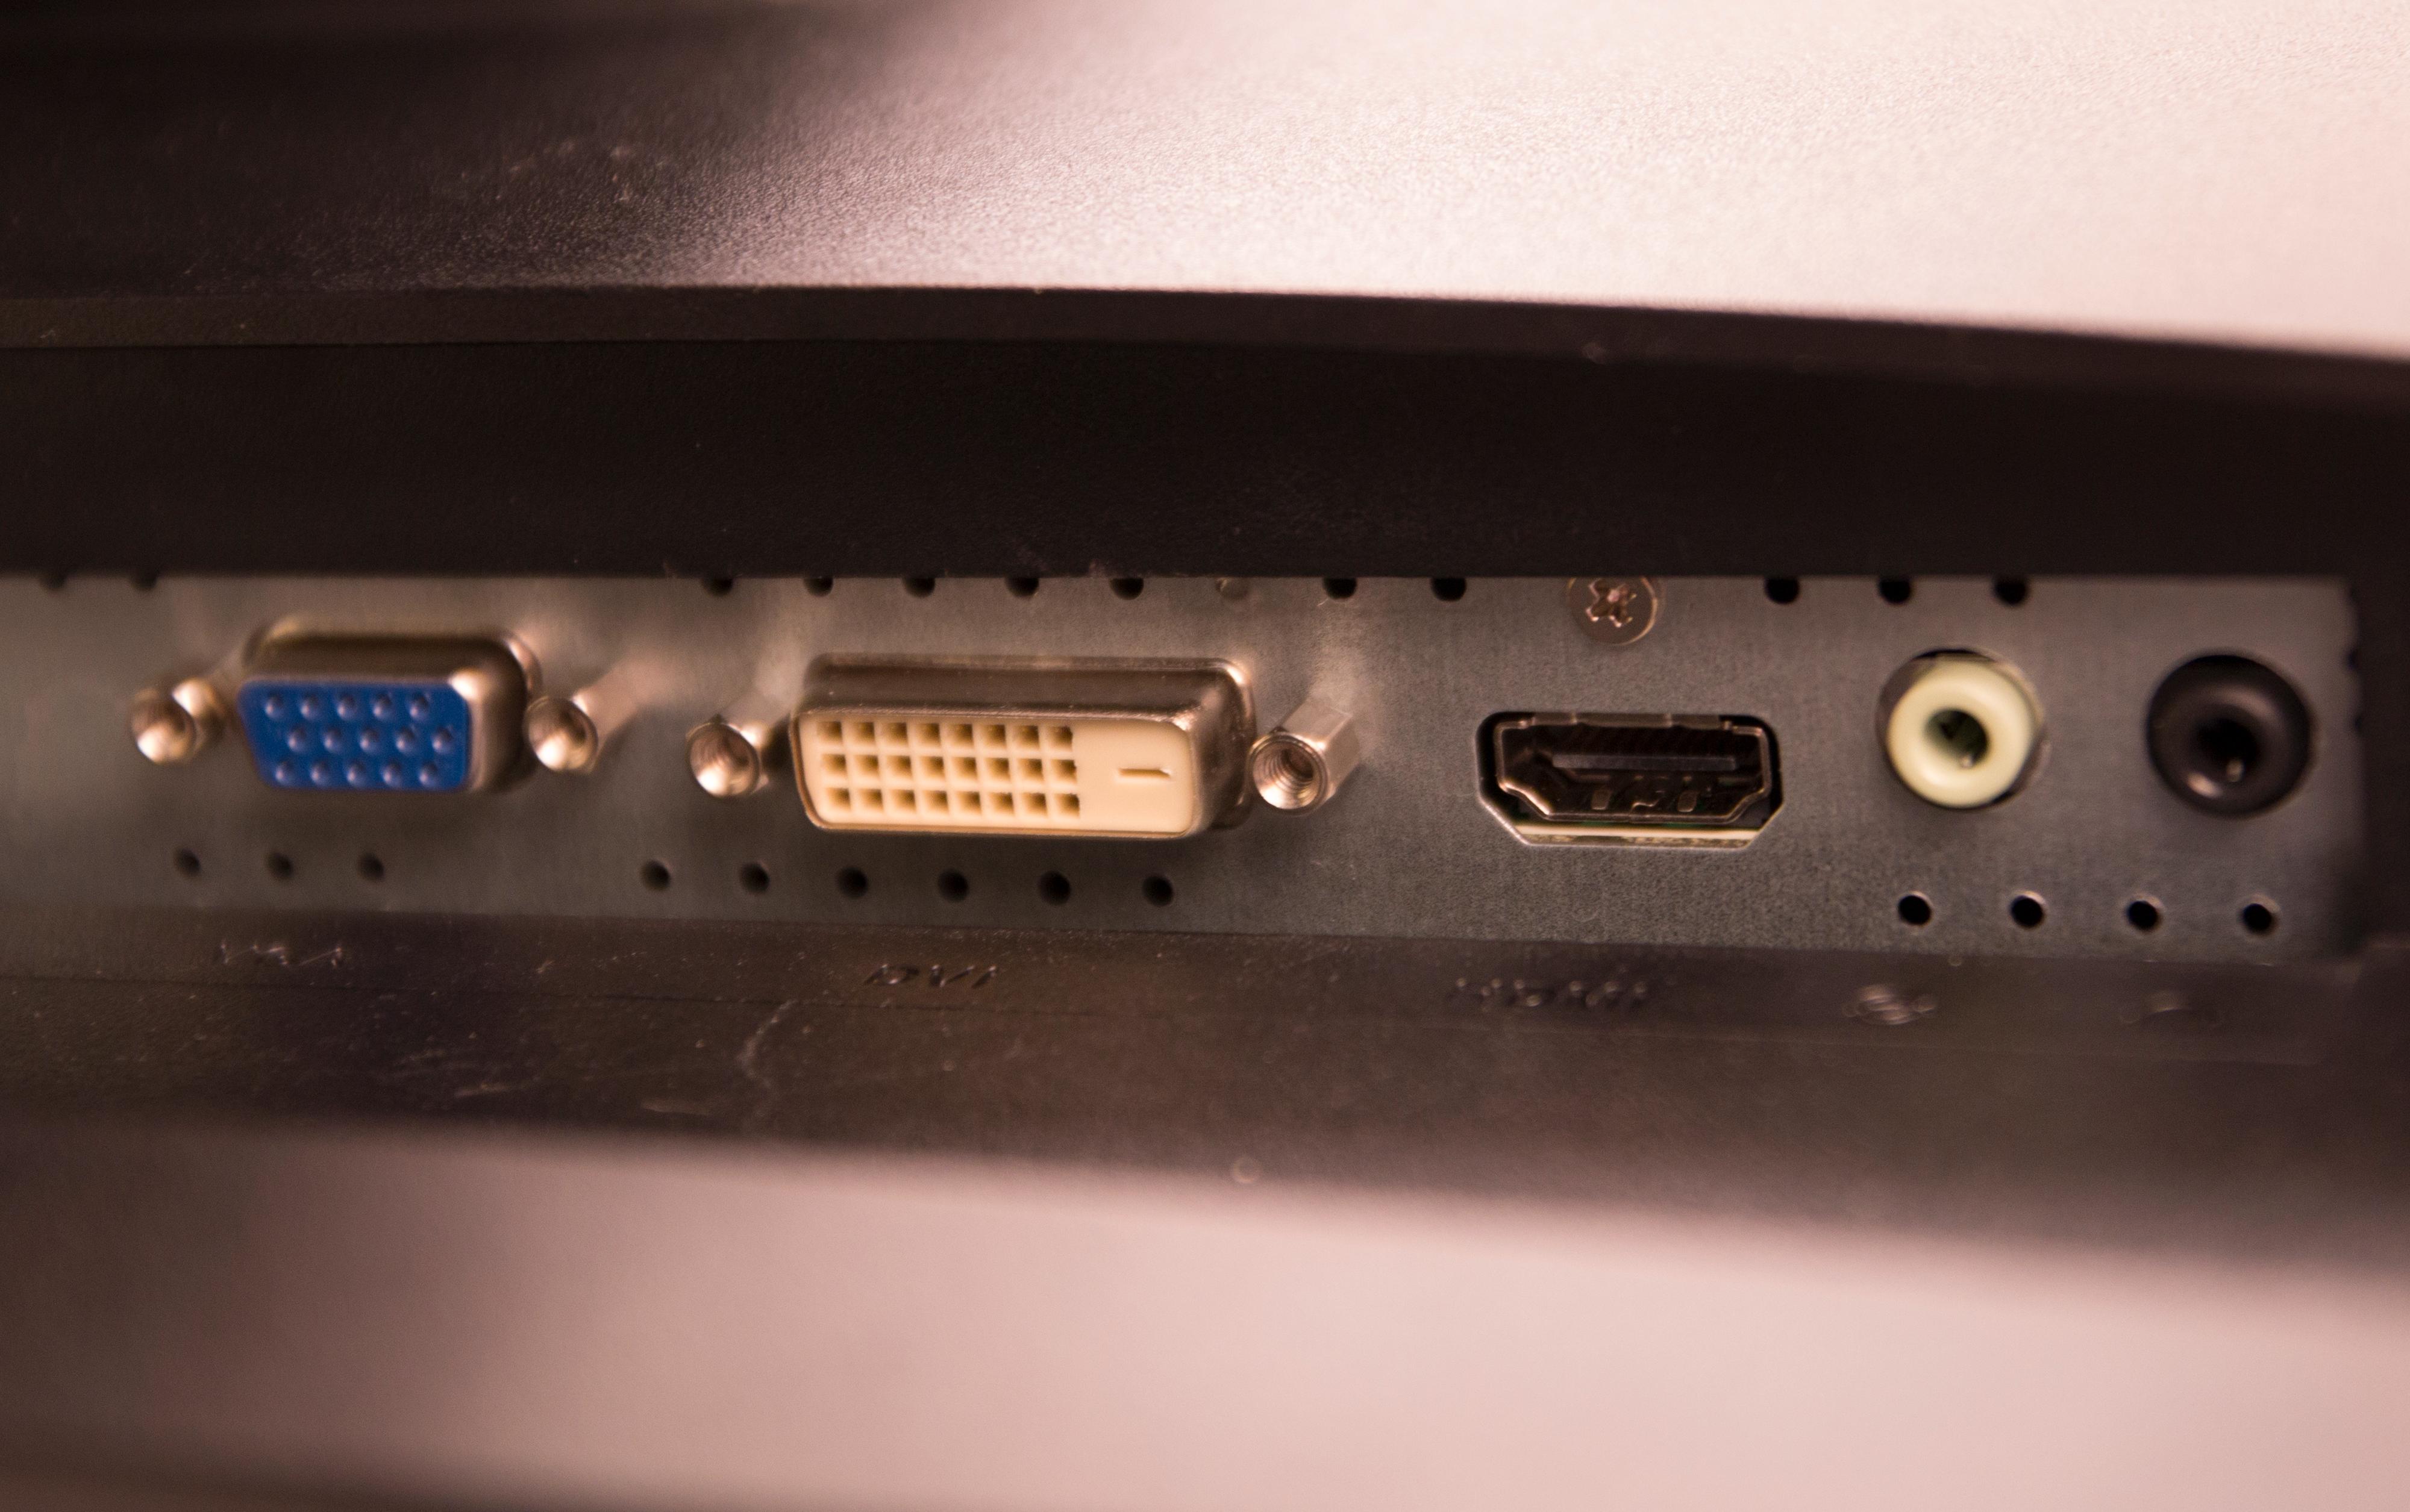 Vi savner en DisplayPort-inngang, og gjerne en USB-port i samme slengen.Foto: Niklas Plikk, Hardware.no